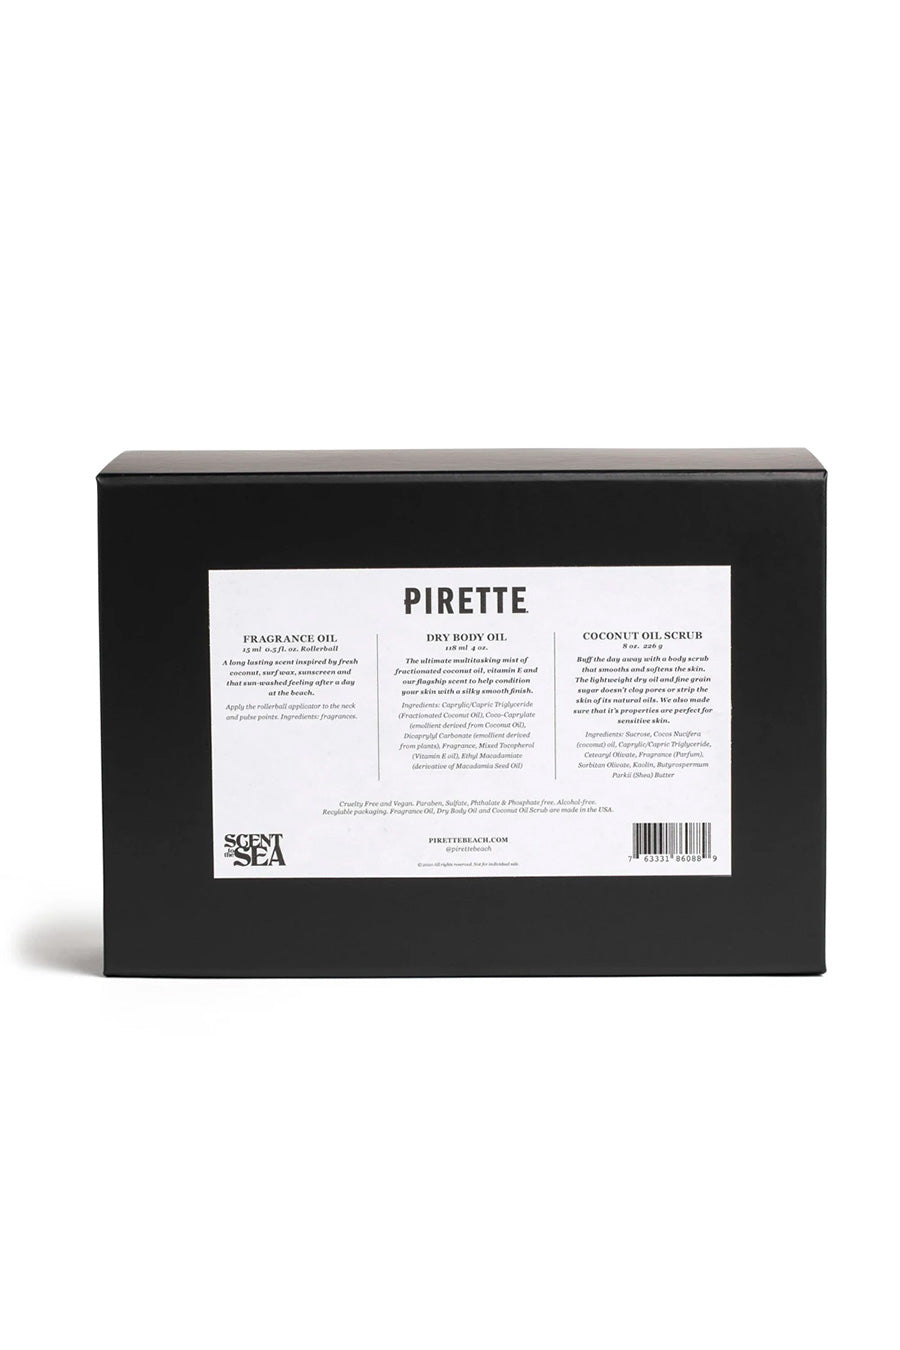 Pirette Gift Box - Main Image Number 4 of 4